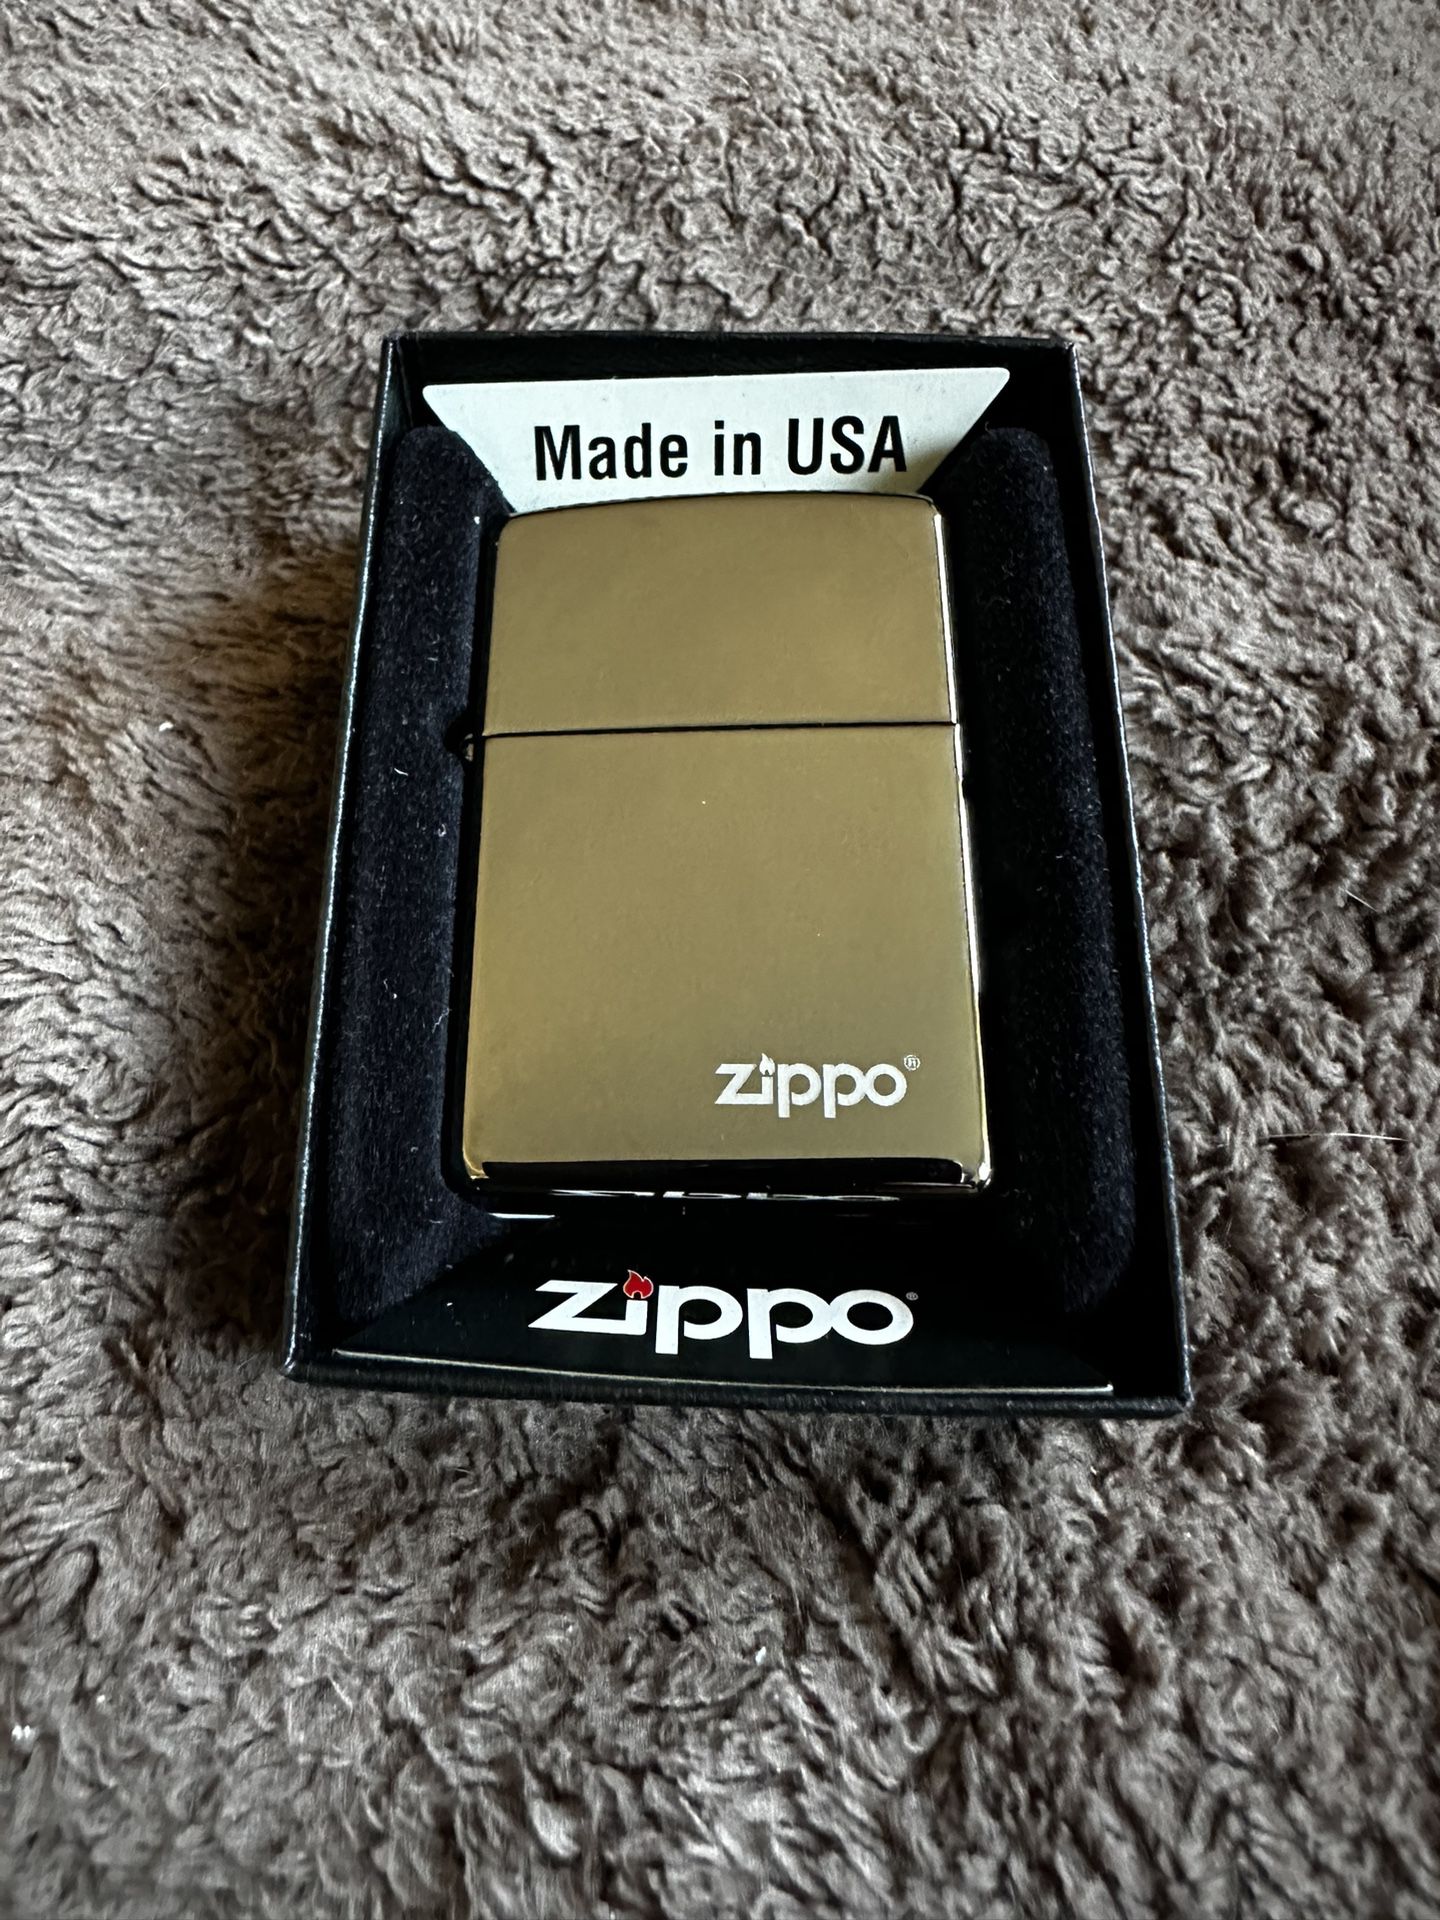 Genuine Black Ice Zippo Lighter